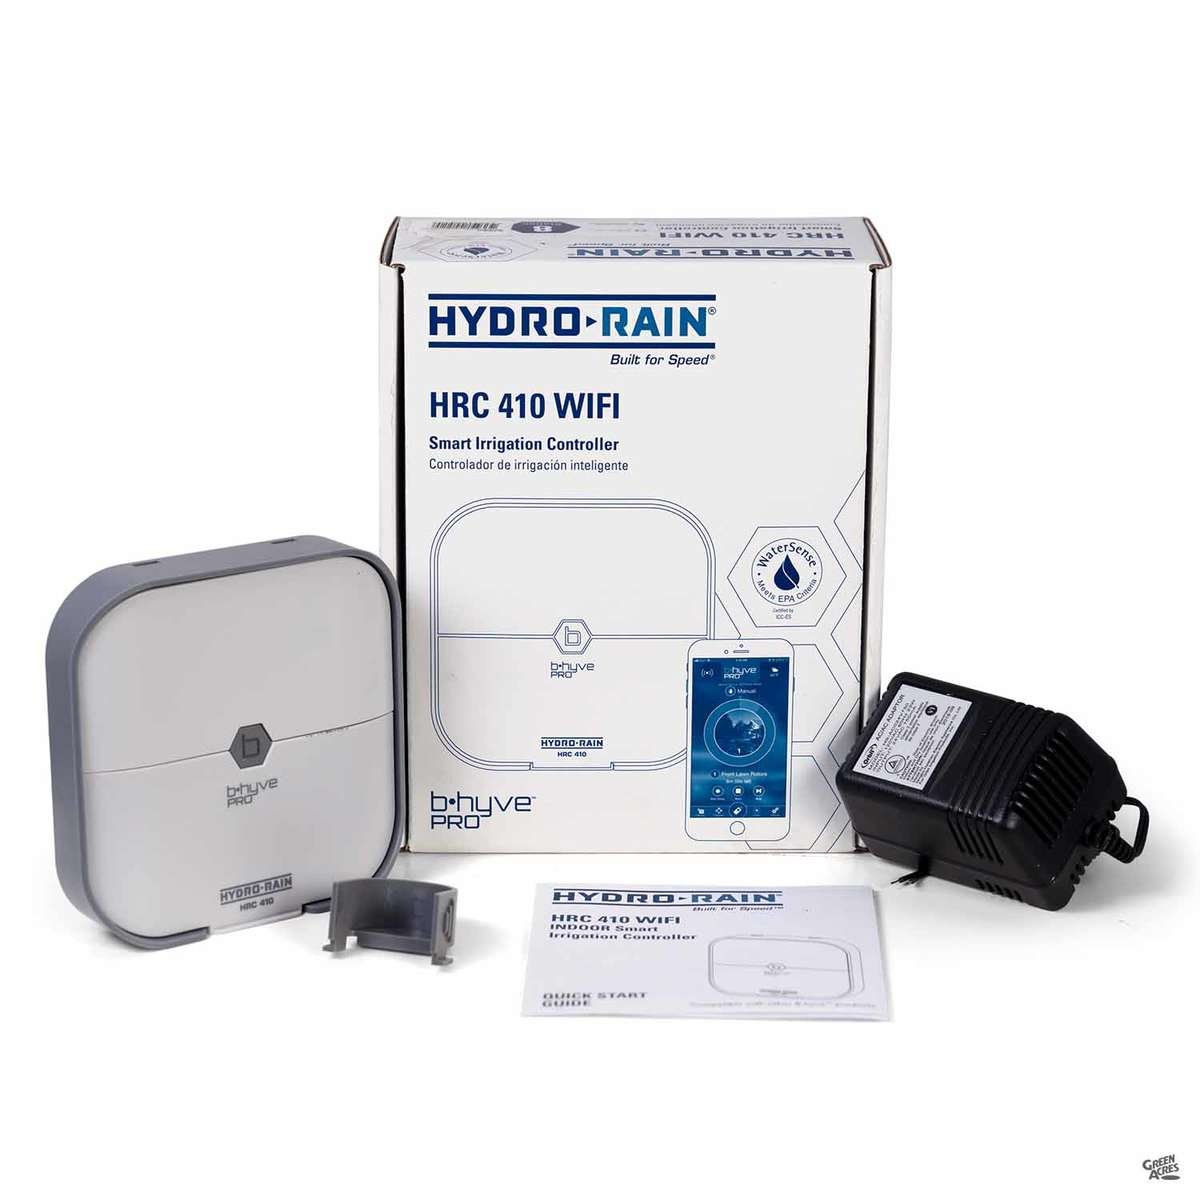 Hydro-Rain HRC 410 WiFi 8 Station Indoor Smart Controller